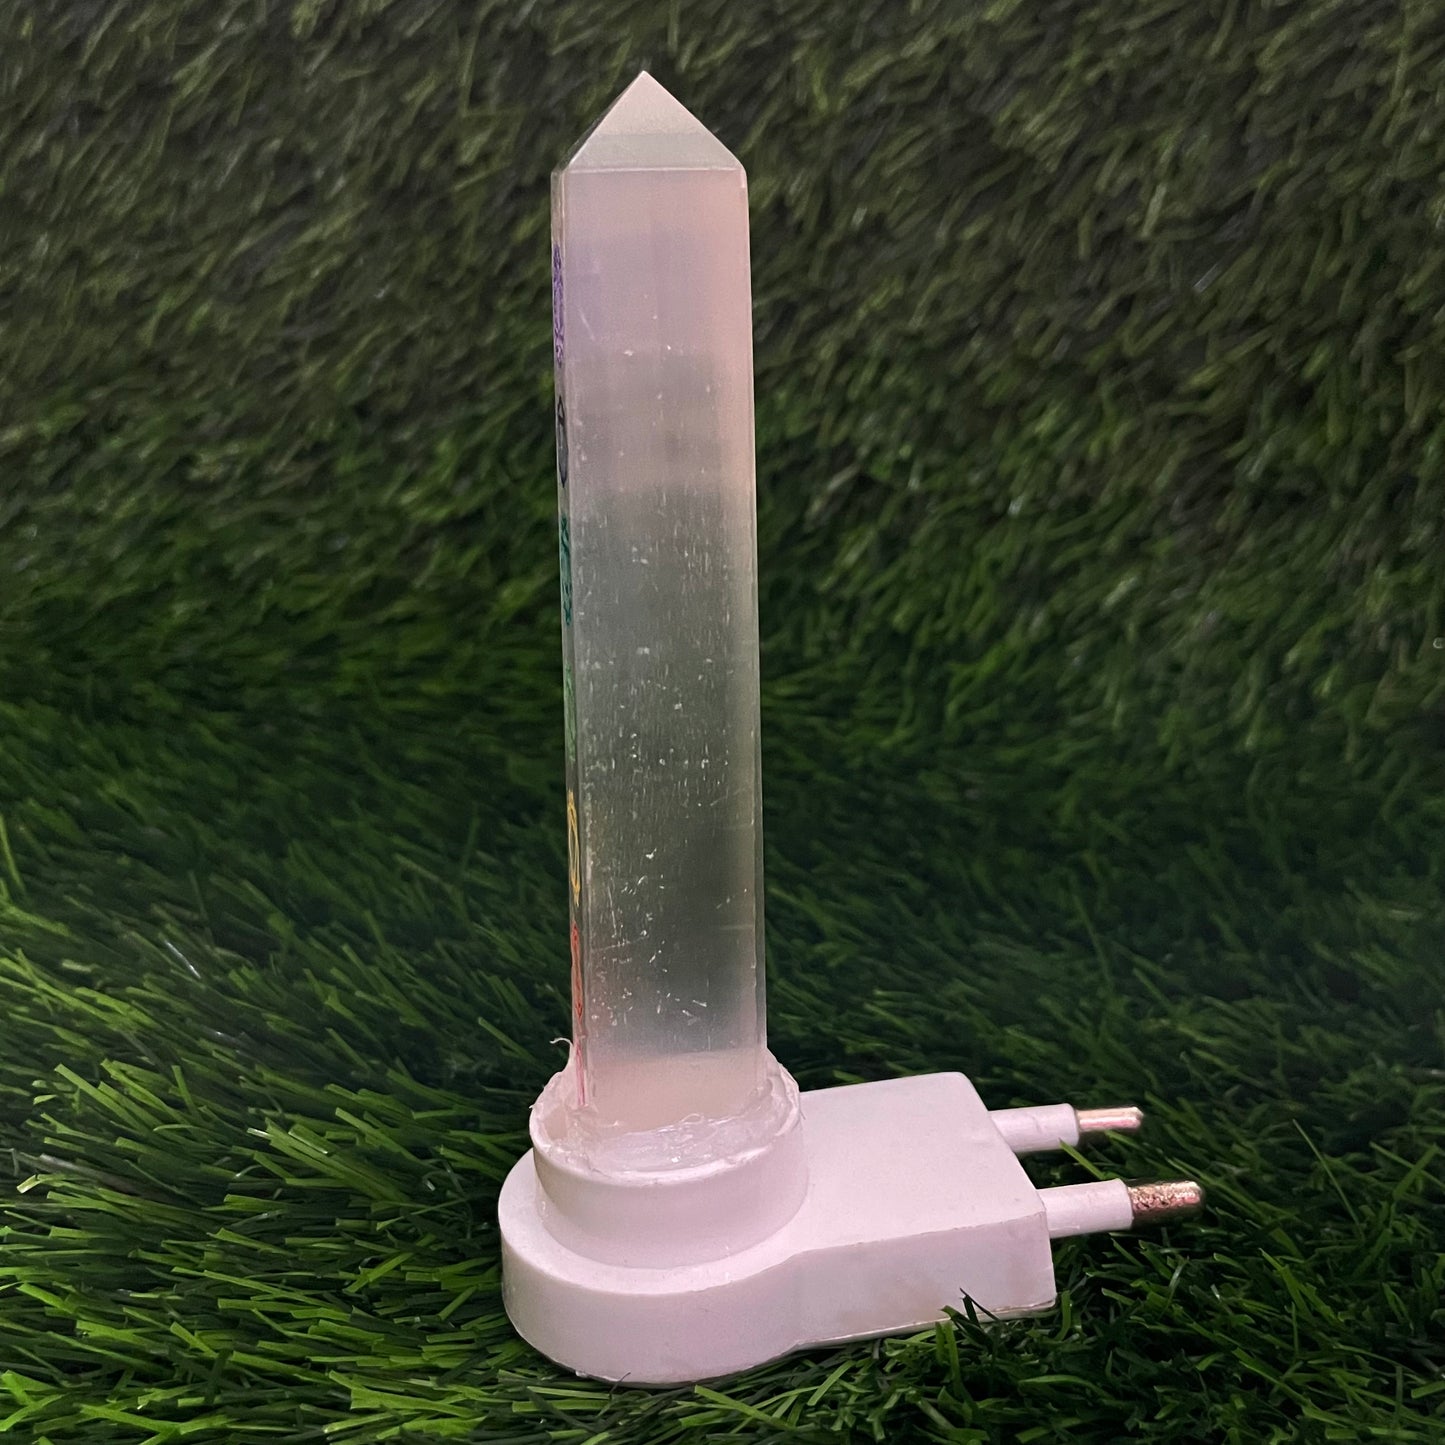 Selenite Crystal Night Light, Selenite Iceberg Night Lights Complete with Bulb & Plugin! (Selenite Lamp, Selenite Skyscraper)